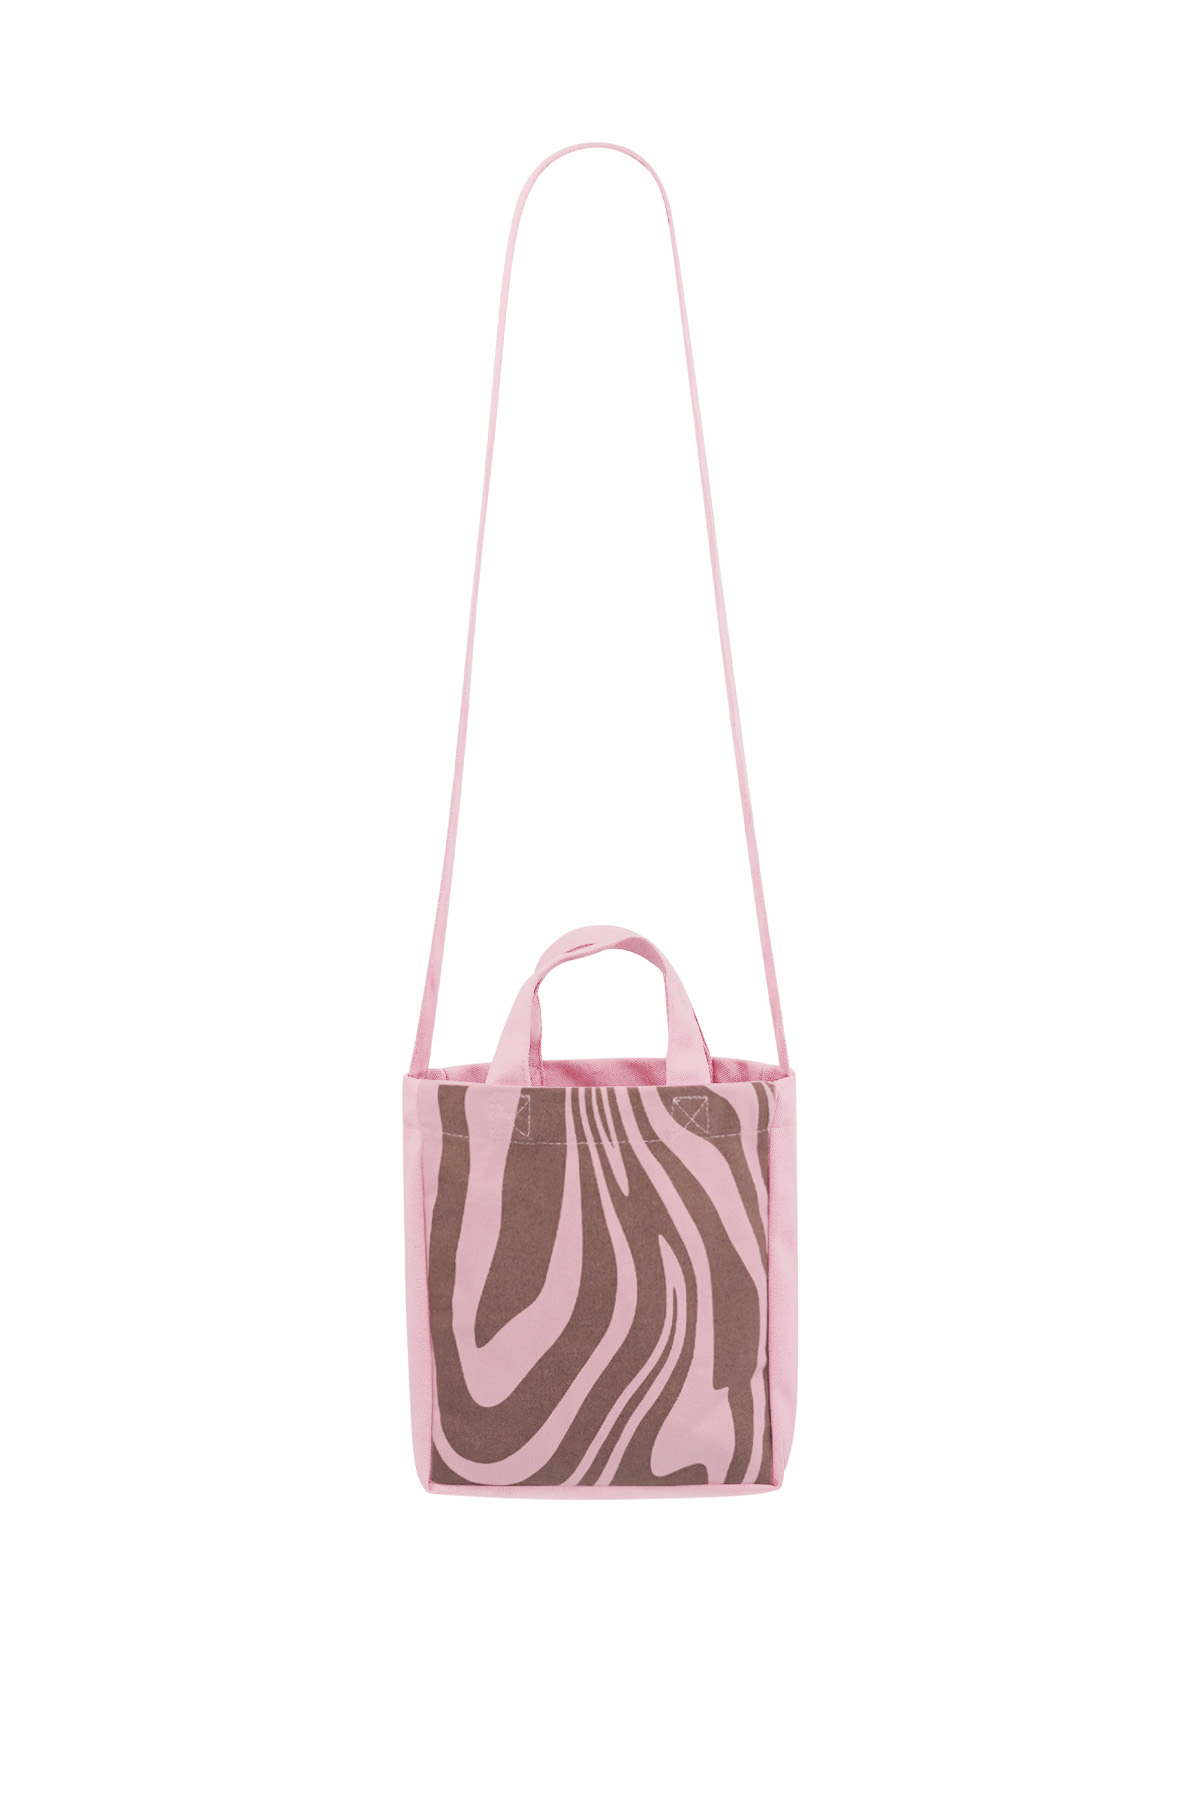 Borsa piccola in tela zebrata - rosa marrone h5 Immagine4